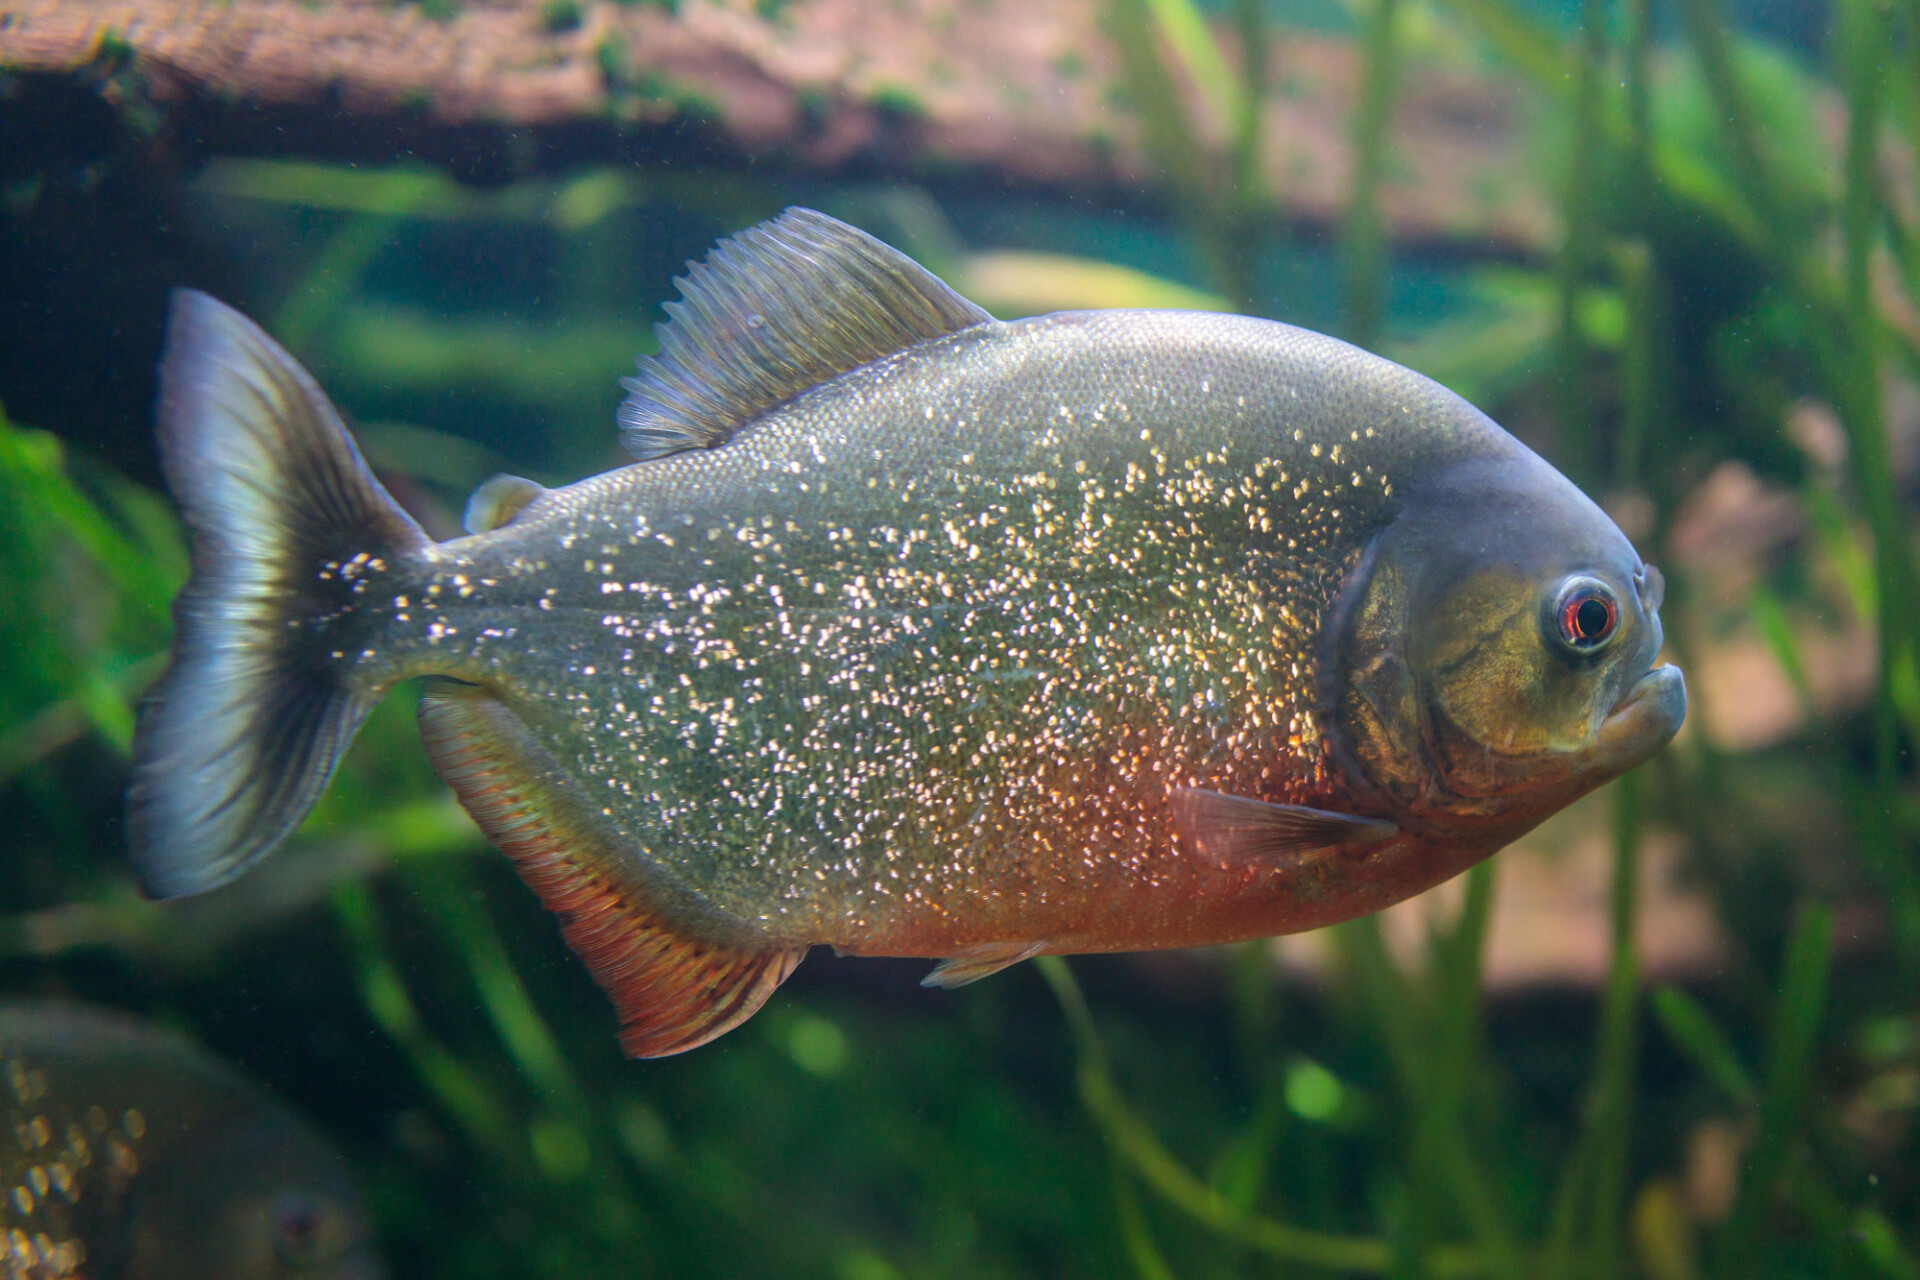 Piranha in a fish tank